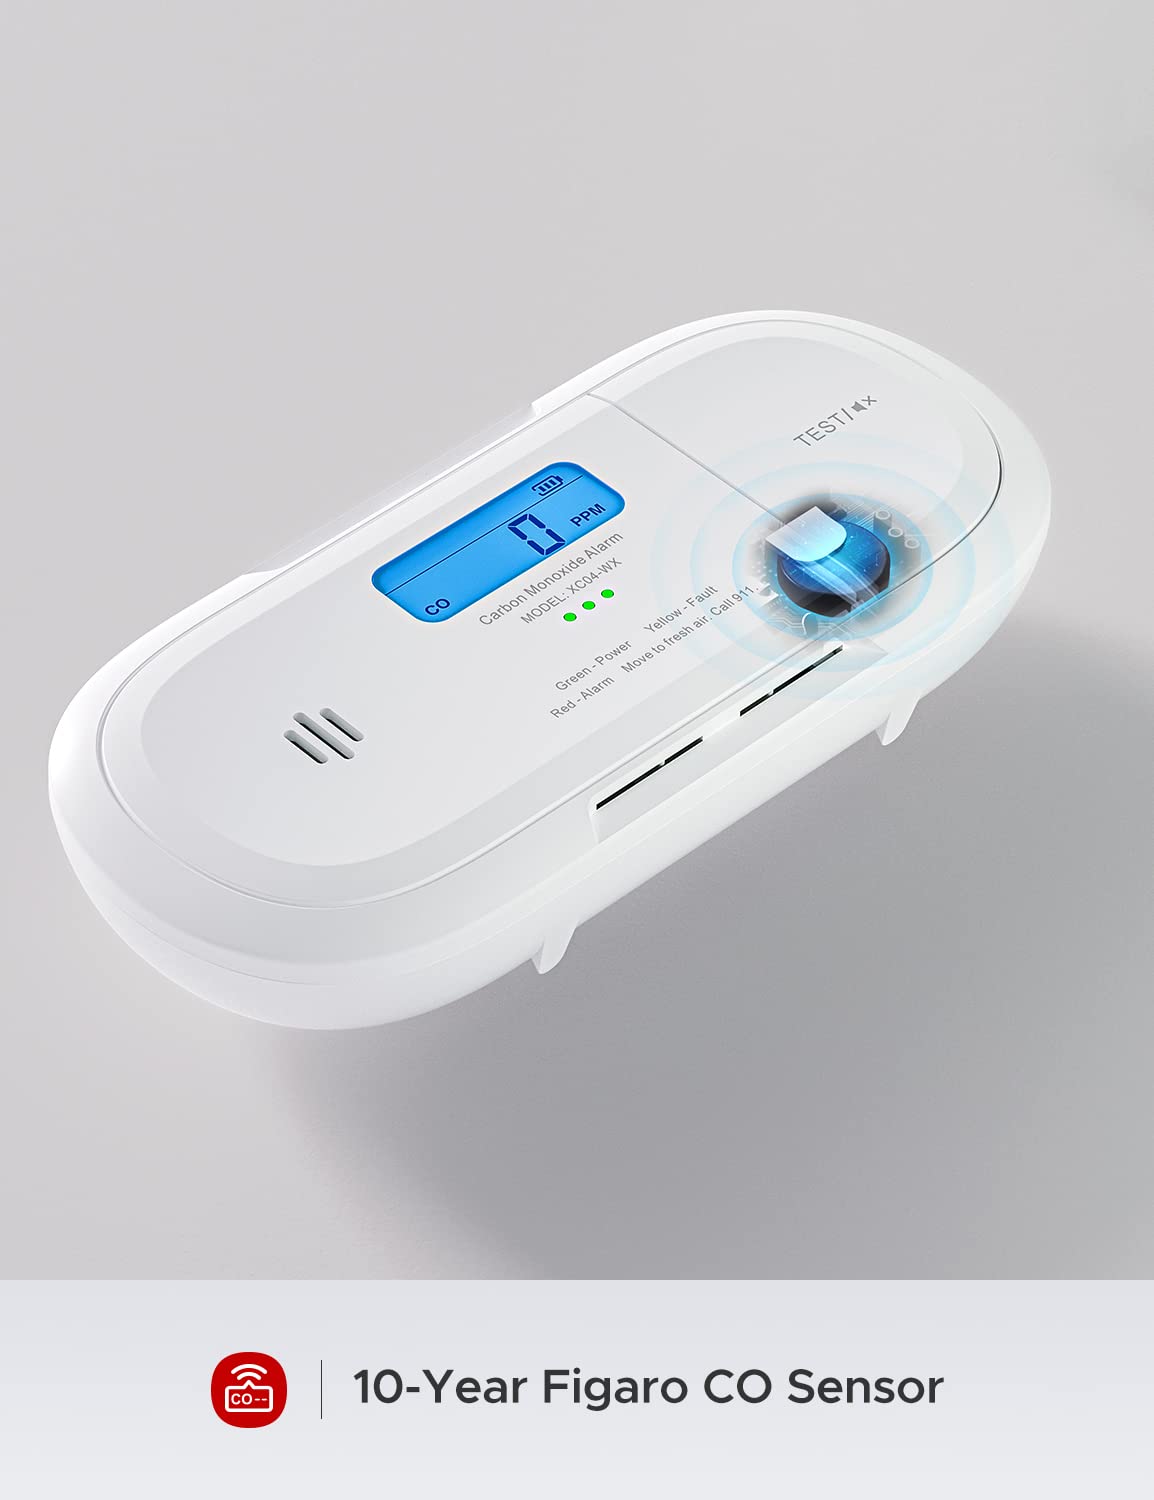 Smart Carbon Monoxide Detector, X-Sense Wi-Fi CO Detector, Real-Time Push Notifications via X-Sense Home Security App, Replaceable Battery, Optional 24/7 Professional Monitoring Service, XC04-WX